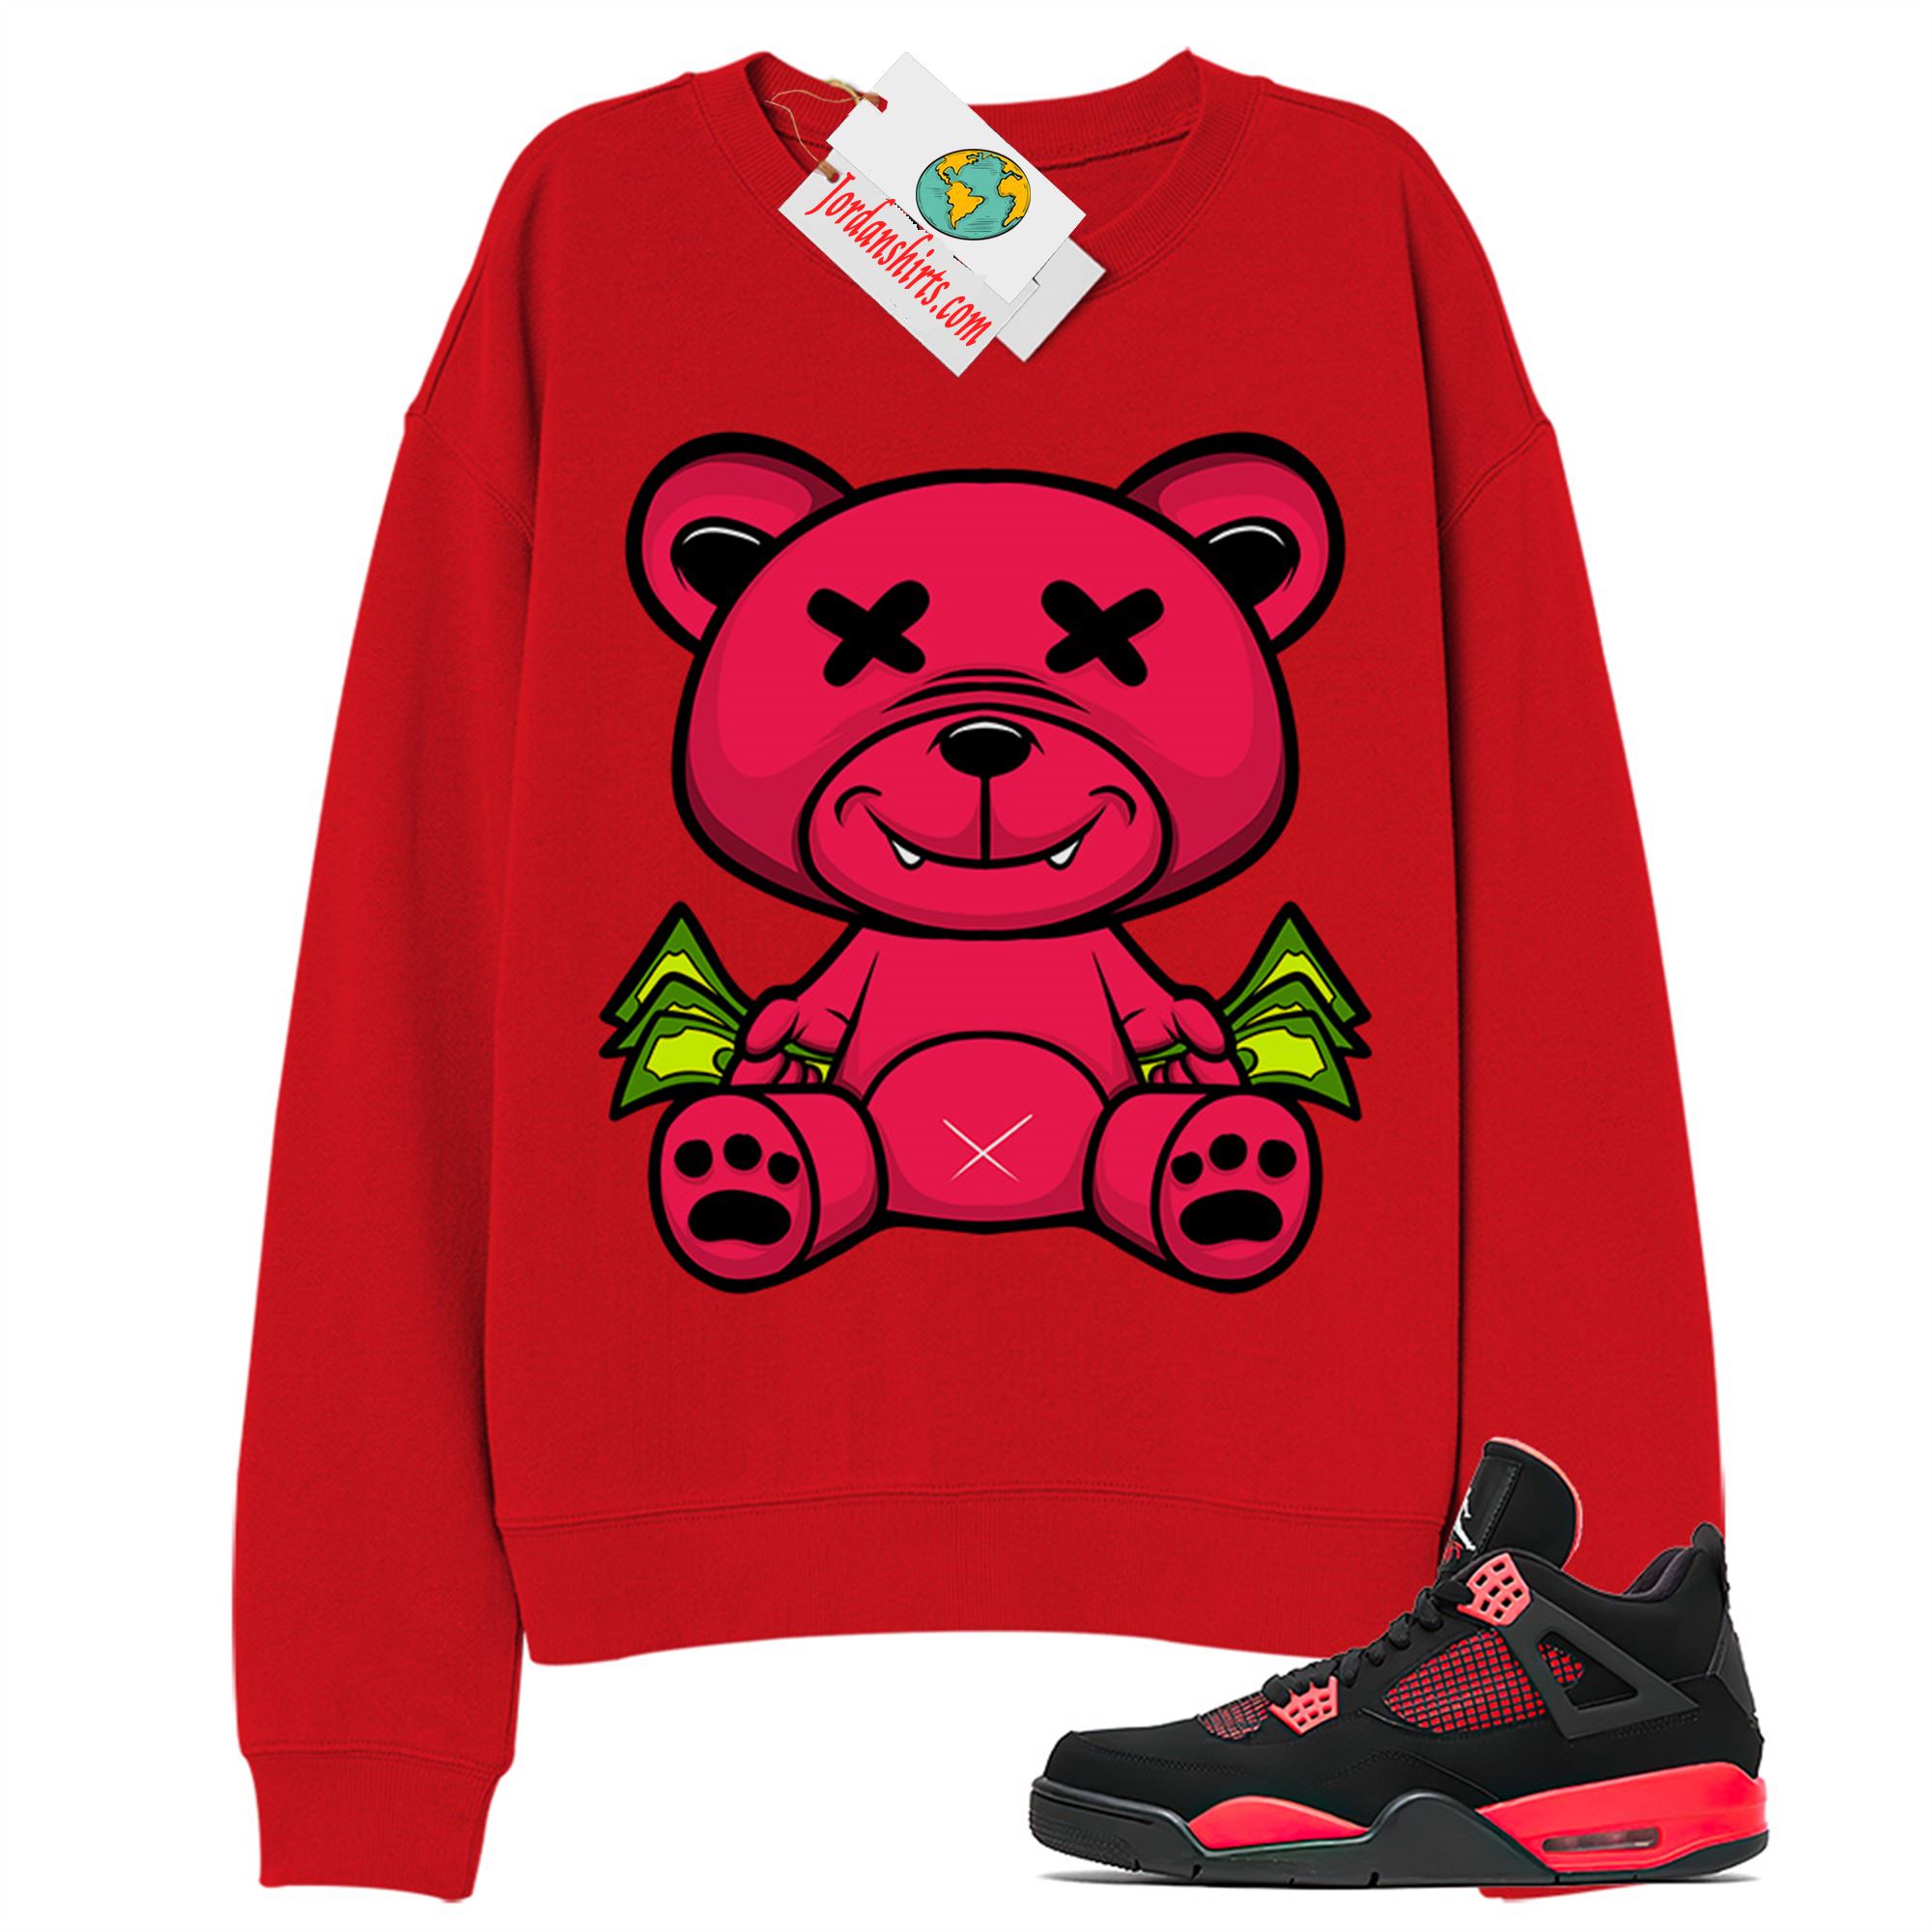 Jordan 4 Sweatshirt, Rich Teddy Bear Red Sweatshirt Air Jordan 4 Red Thunder 4s Plus Size Up To 5xl